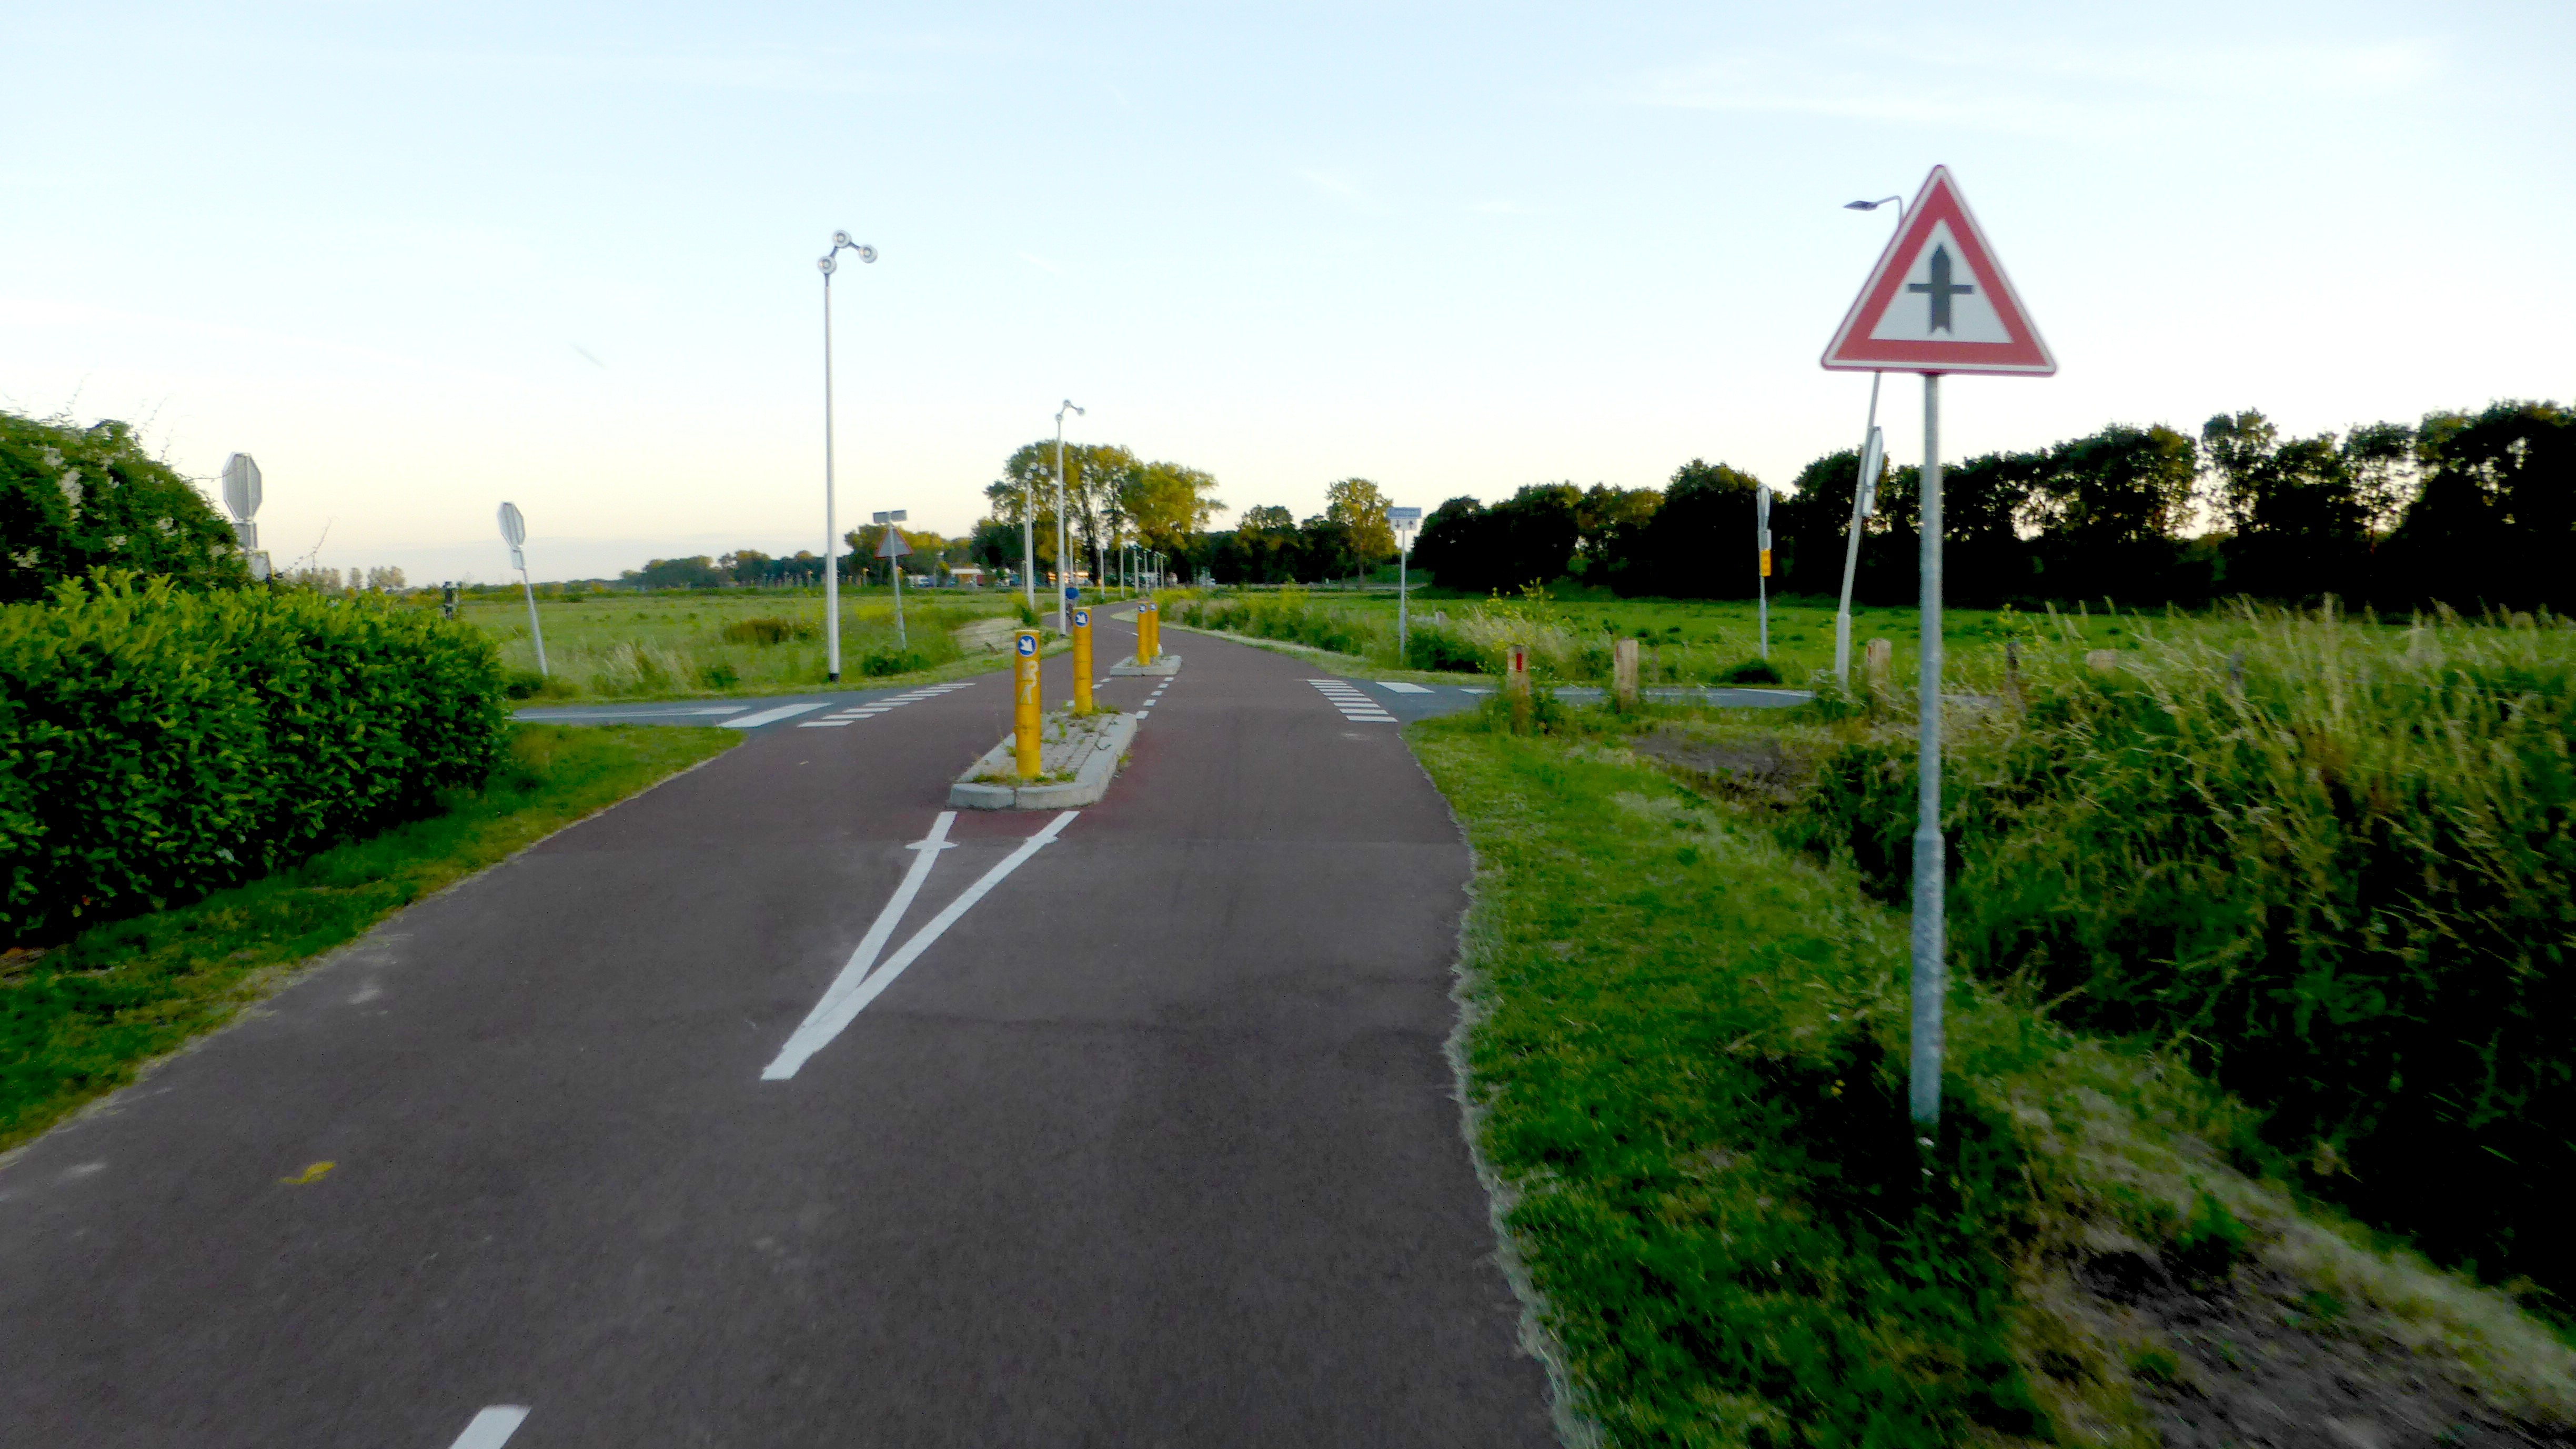 Cycle highway RijnWaalpad connecting Arnhem and Nijmegen